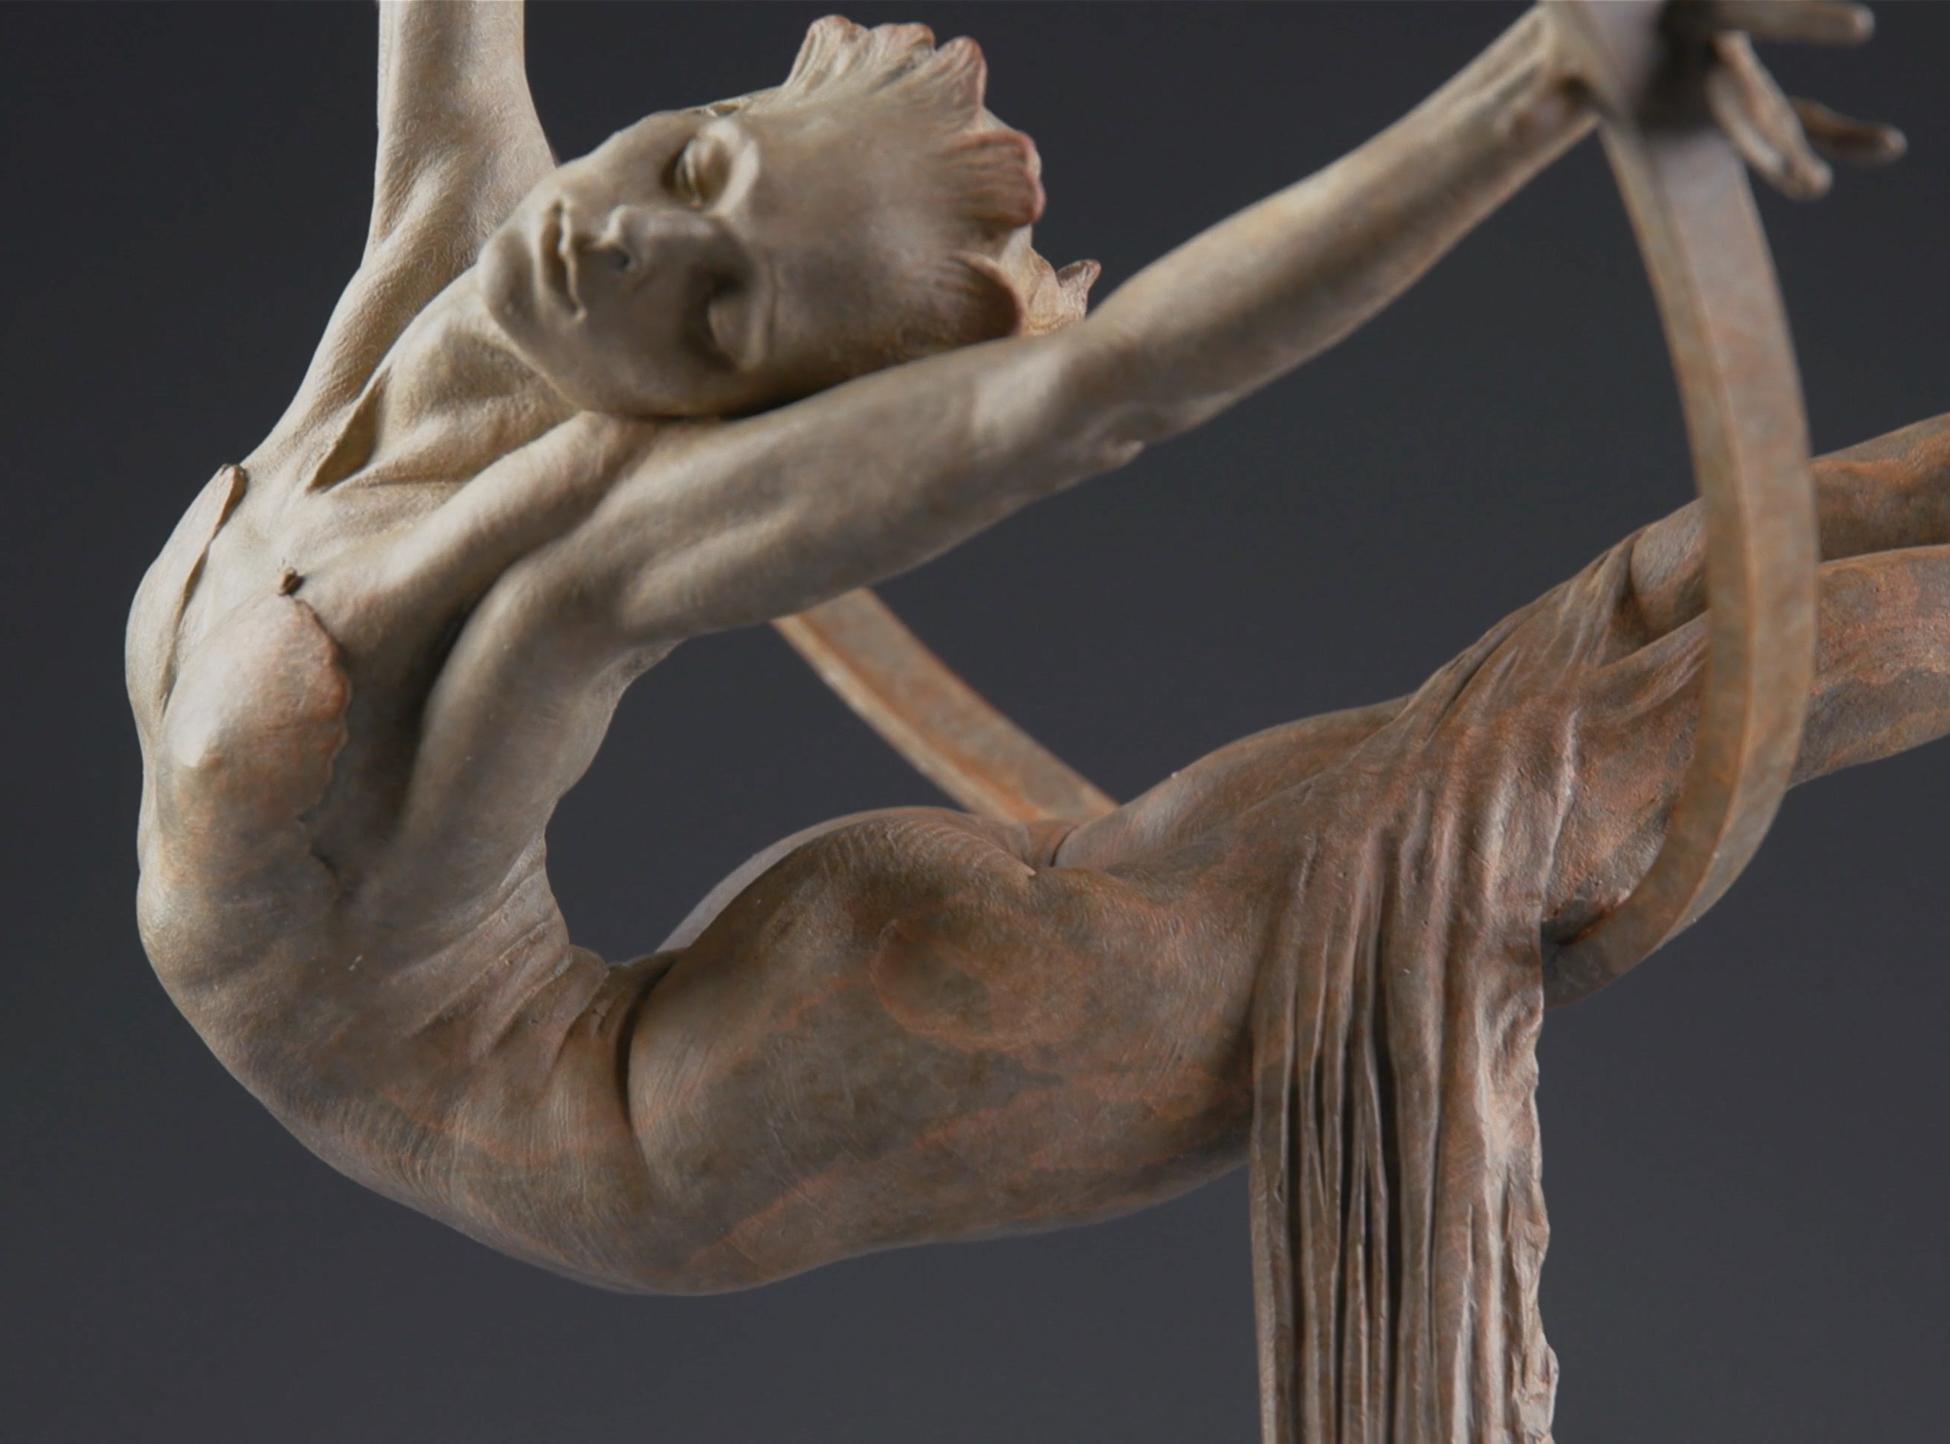 Elena, Atelier - Sculpture by Richard MacDonald